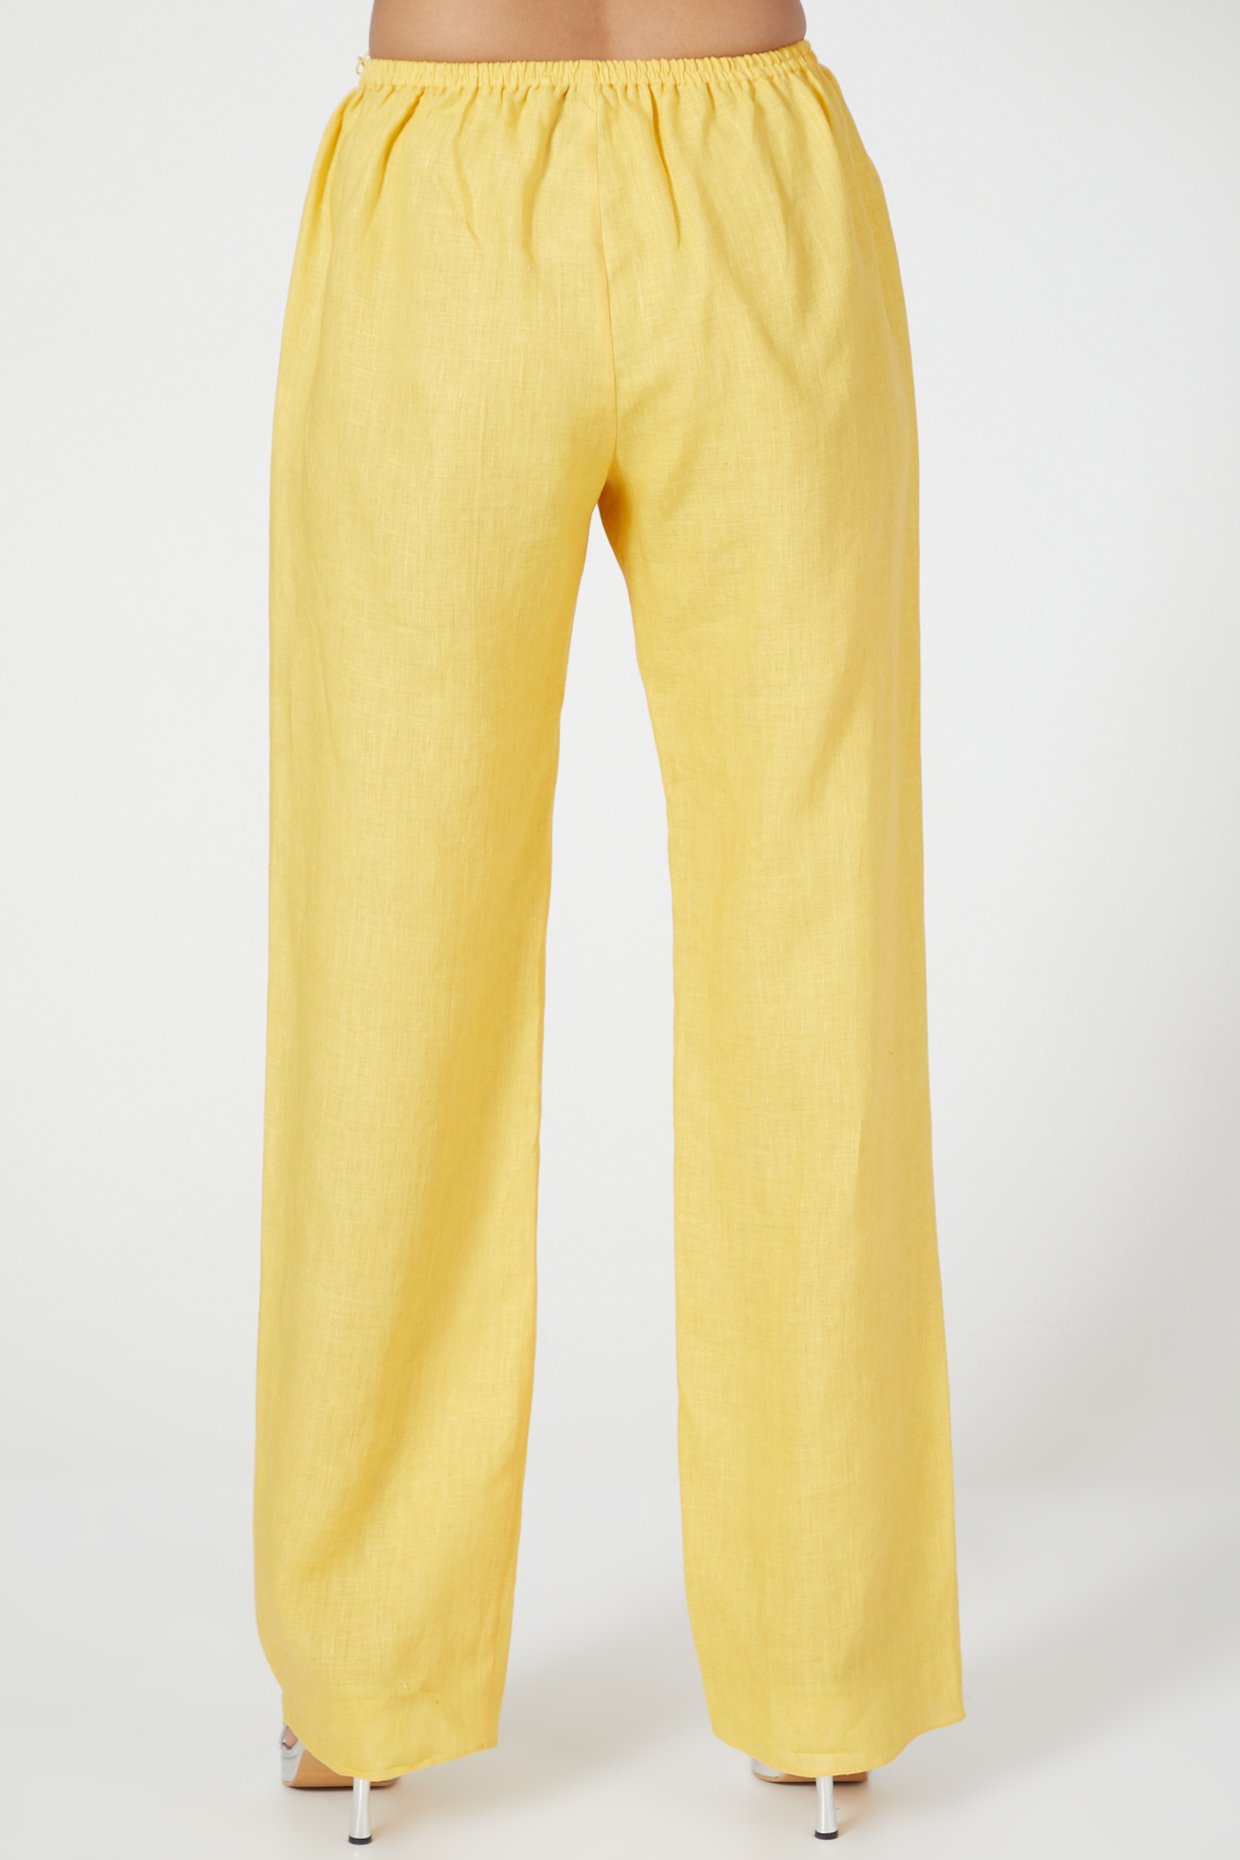 Yellow Linen Pants